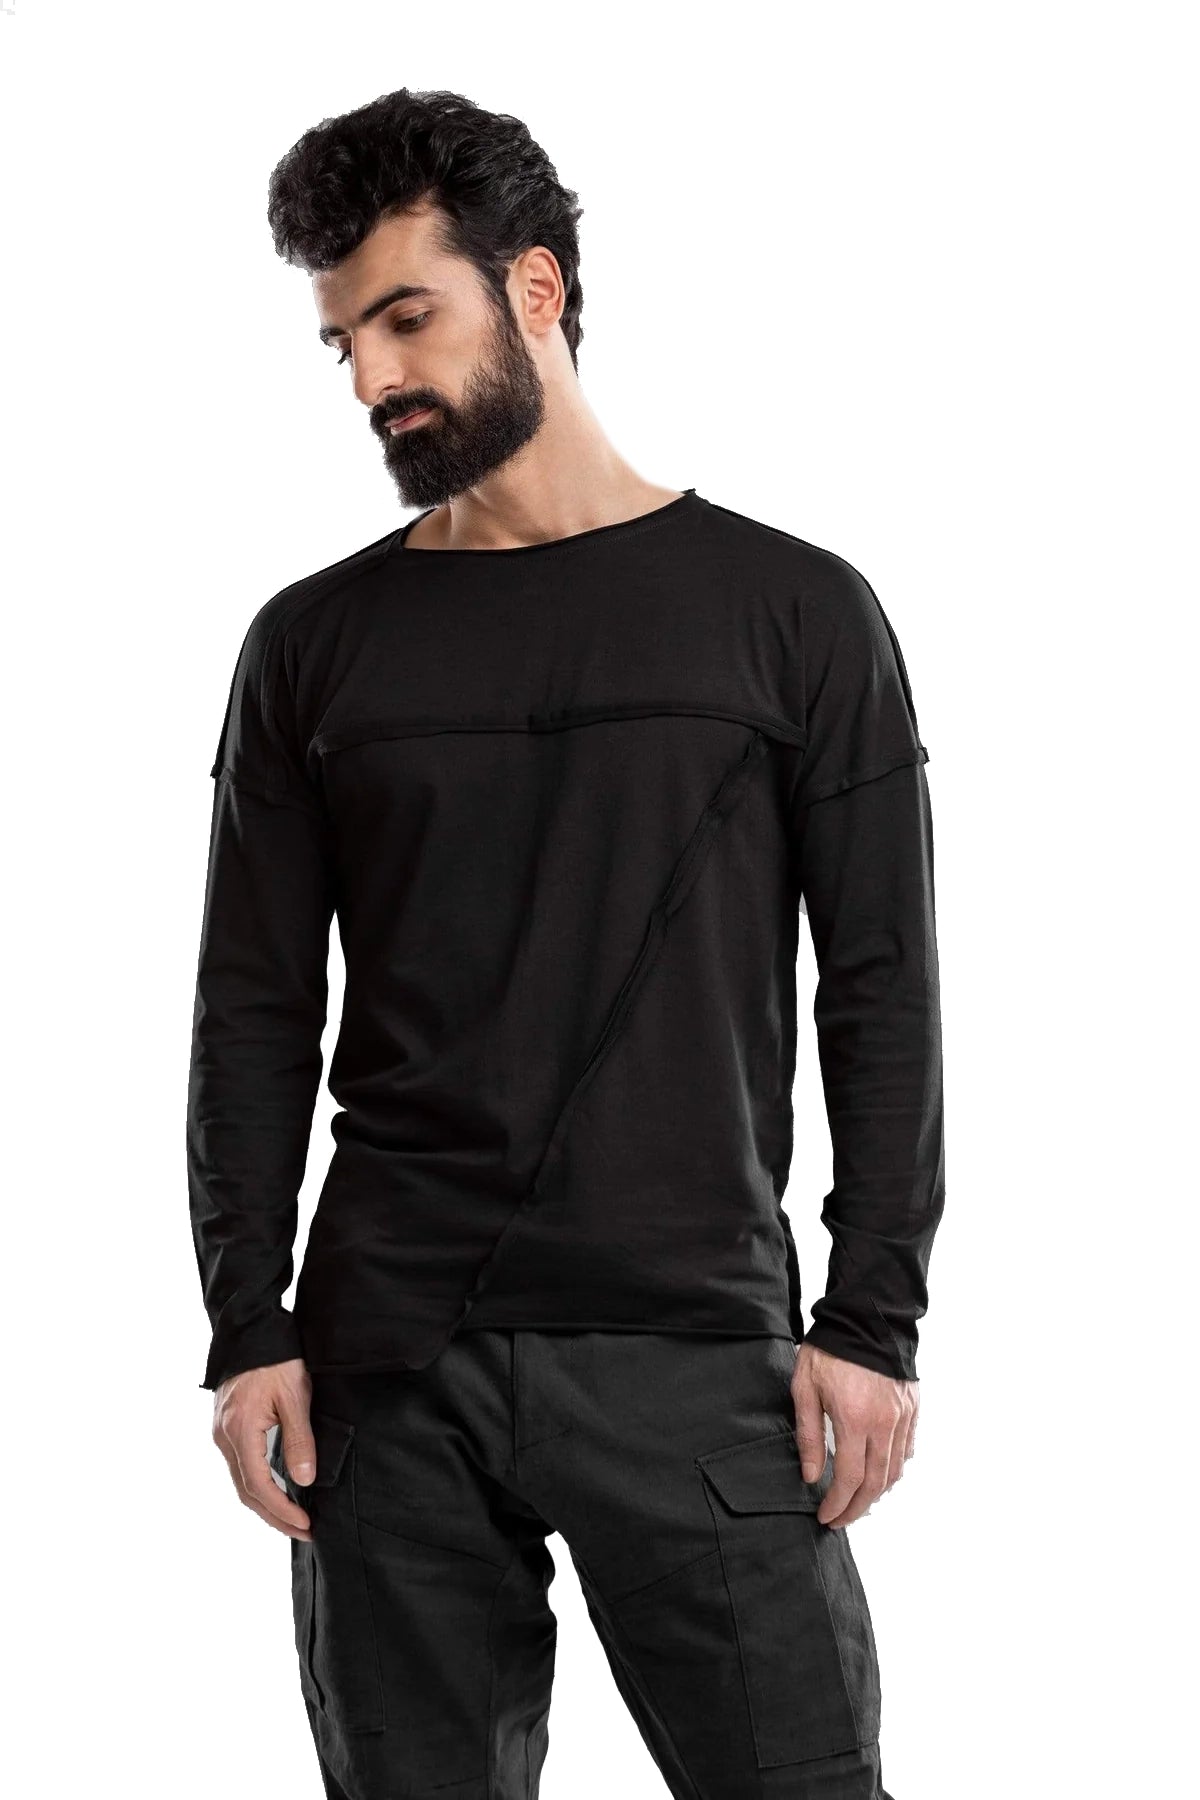 Bundle: 2x Black Long Sleeve T-shirt